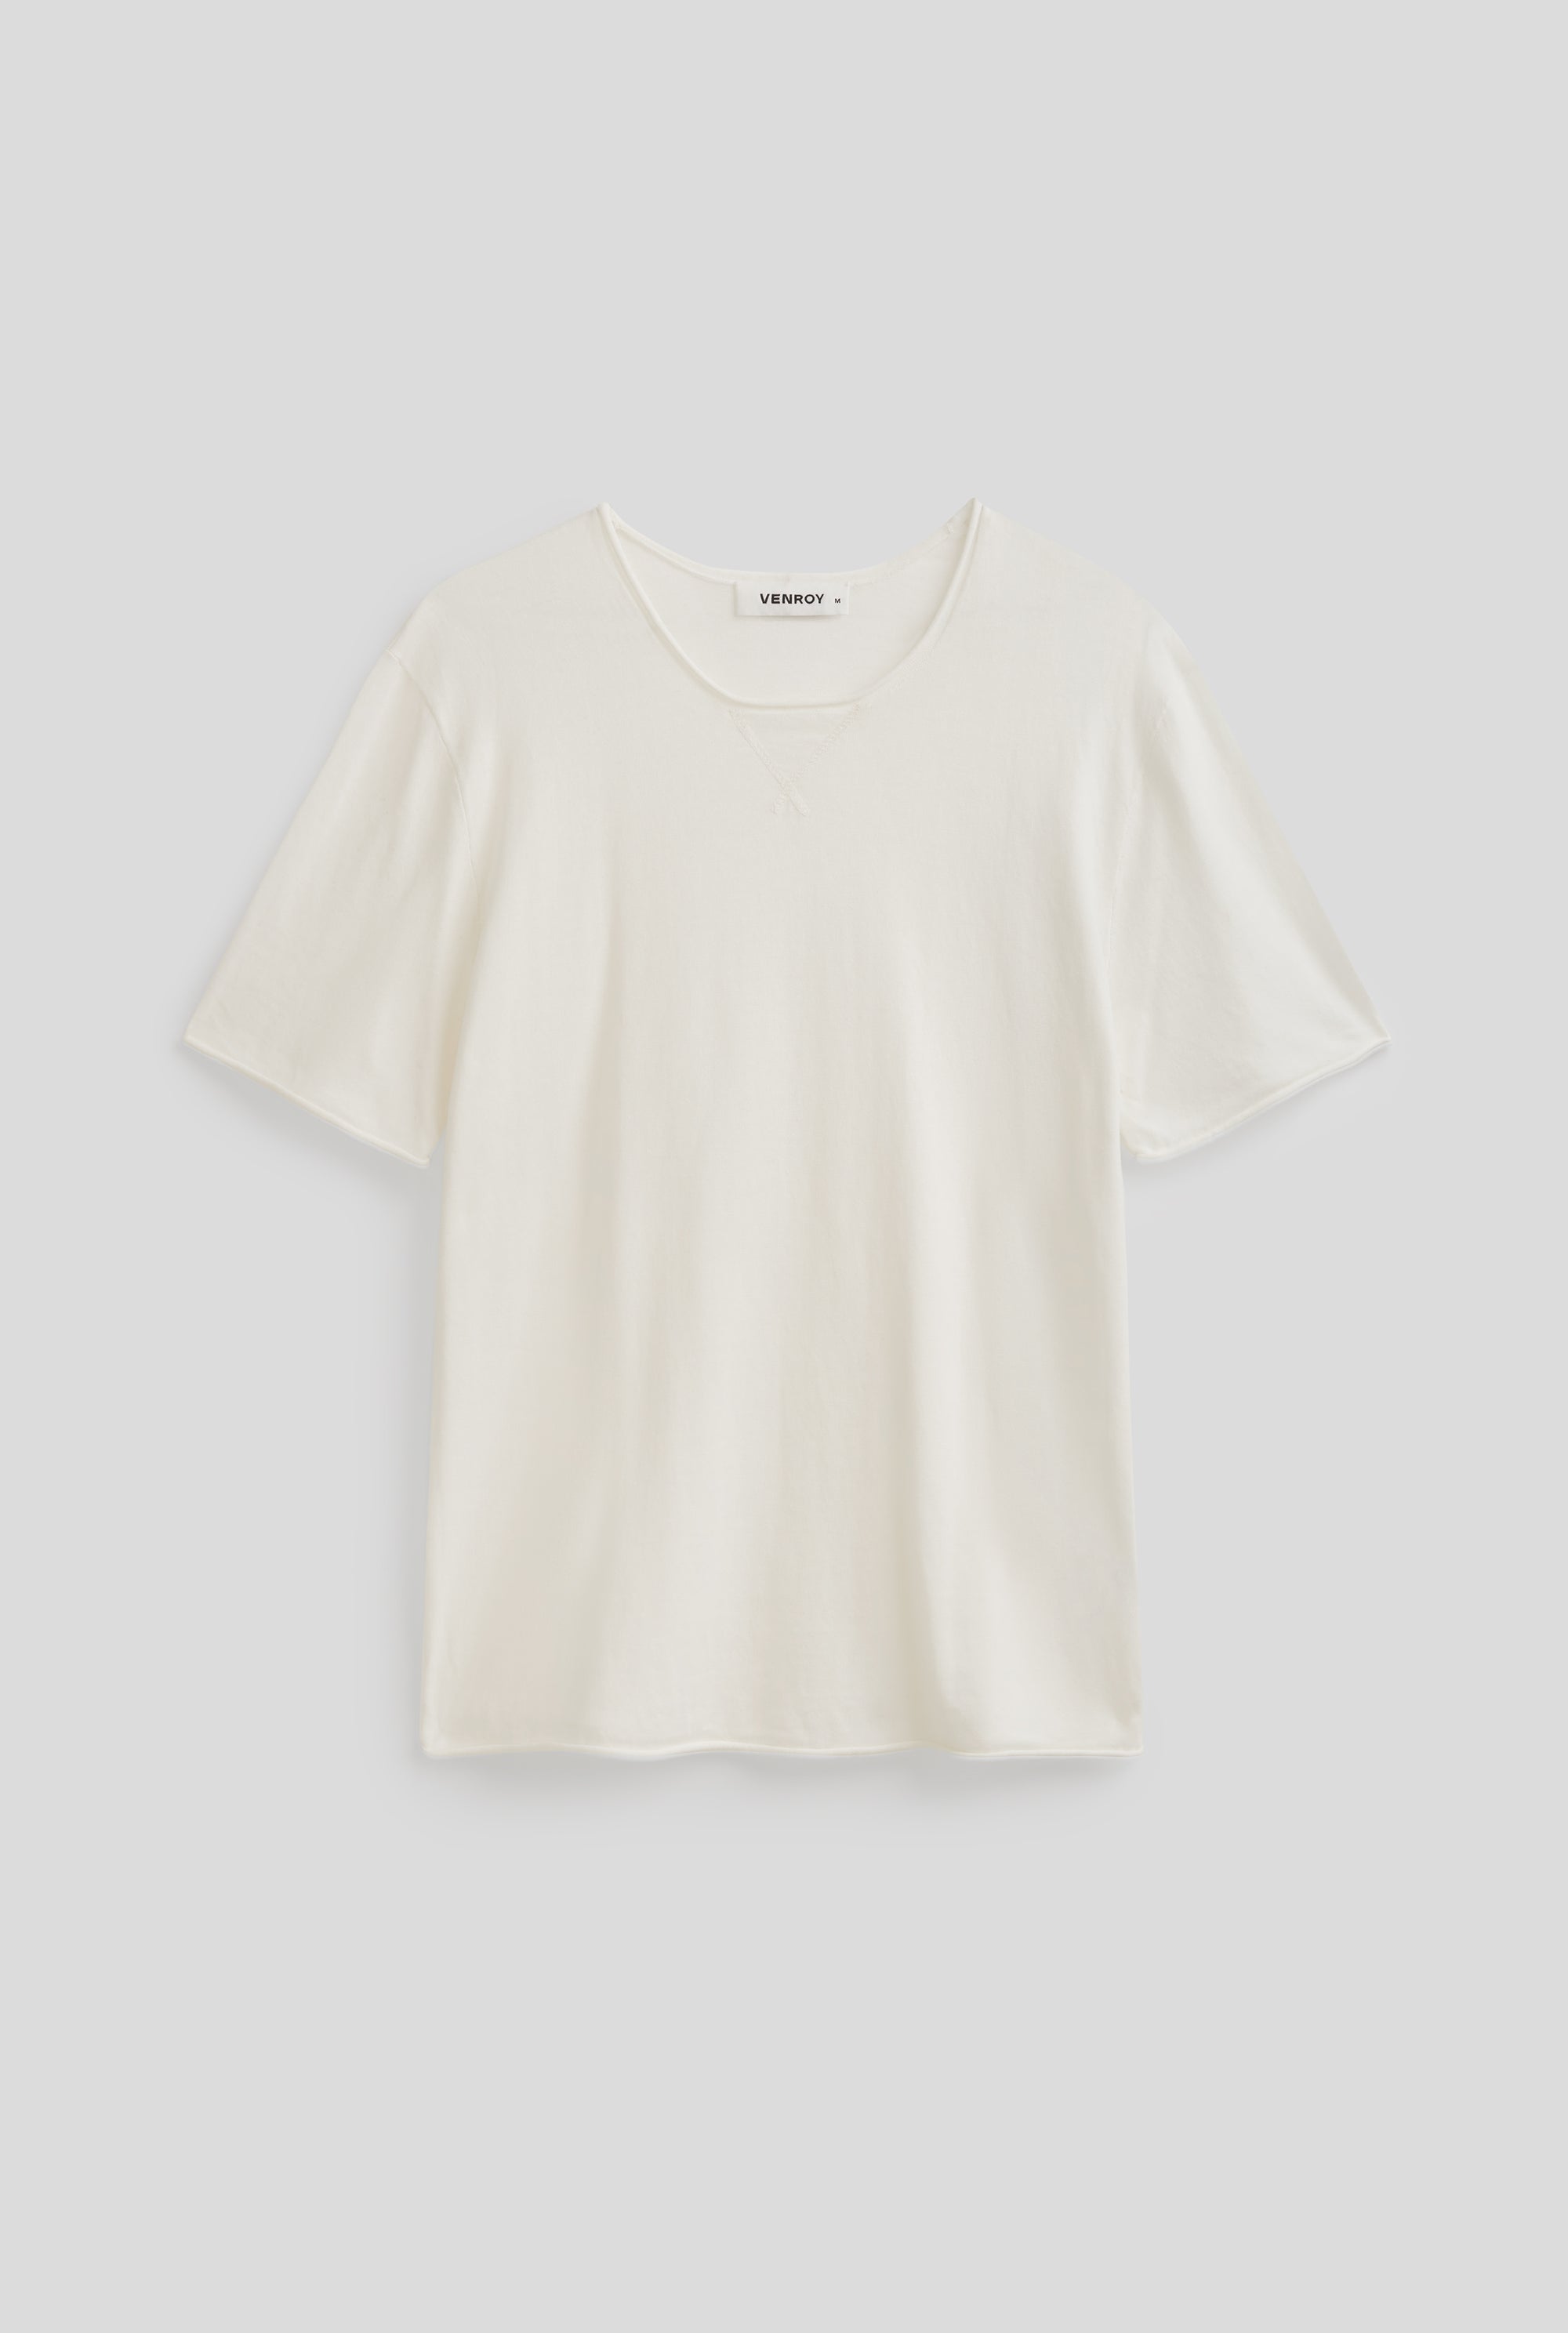 Venroy - Mens Rolled Edge Cotton Knit T Shirt in Off White | Venroy ...